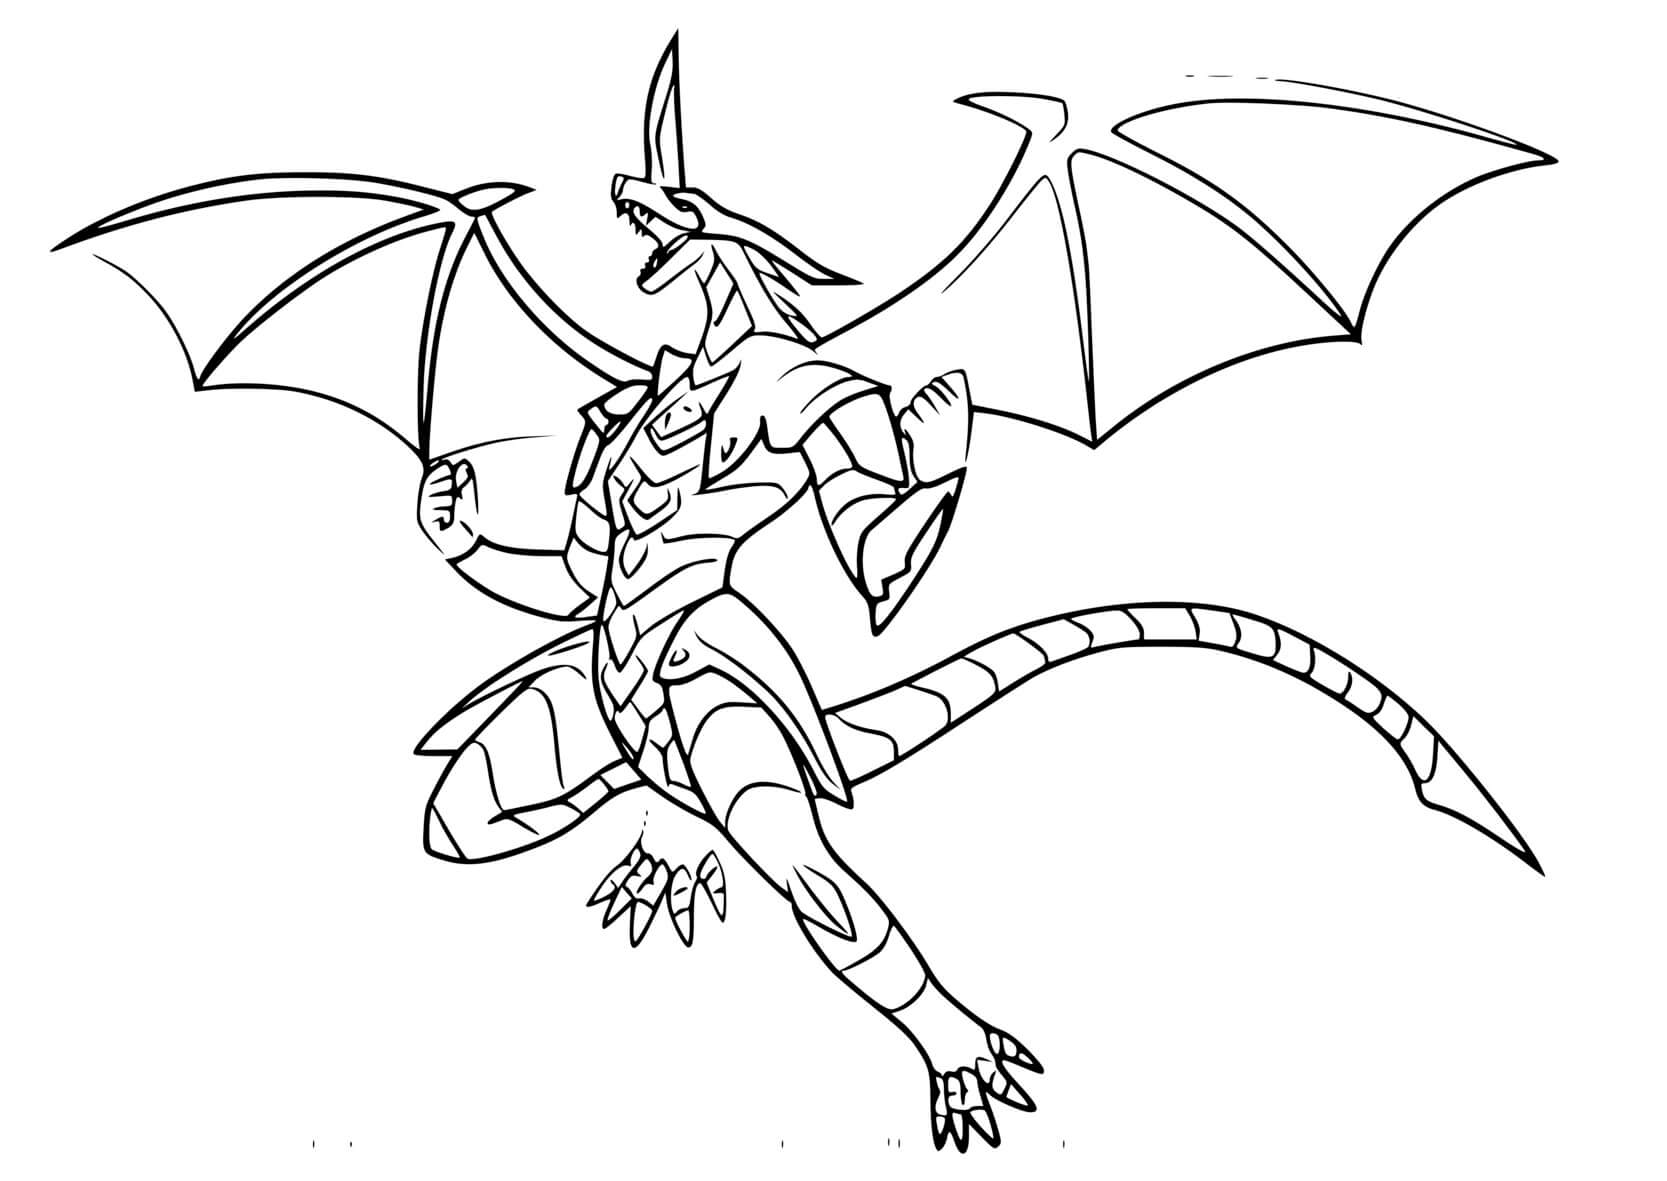 Drago Leader Of The Bakugan Coloring Page